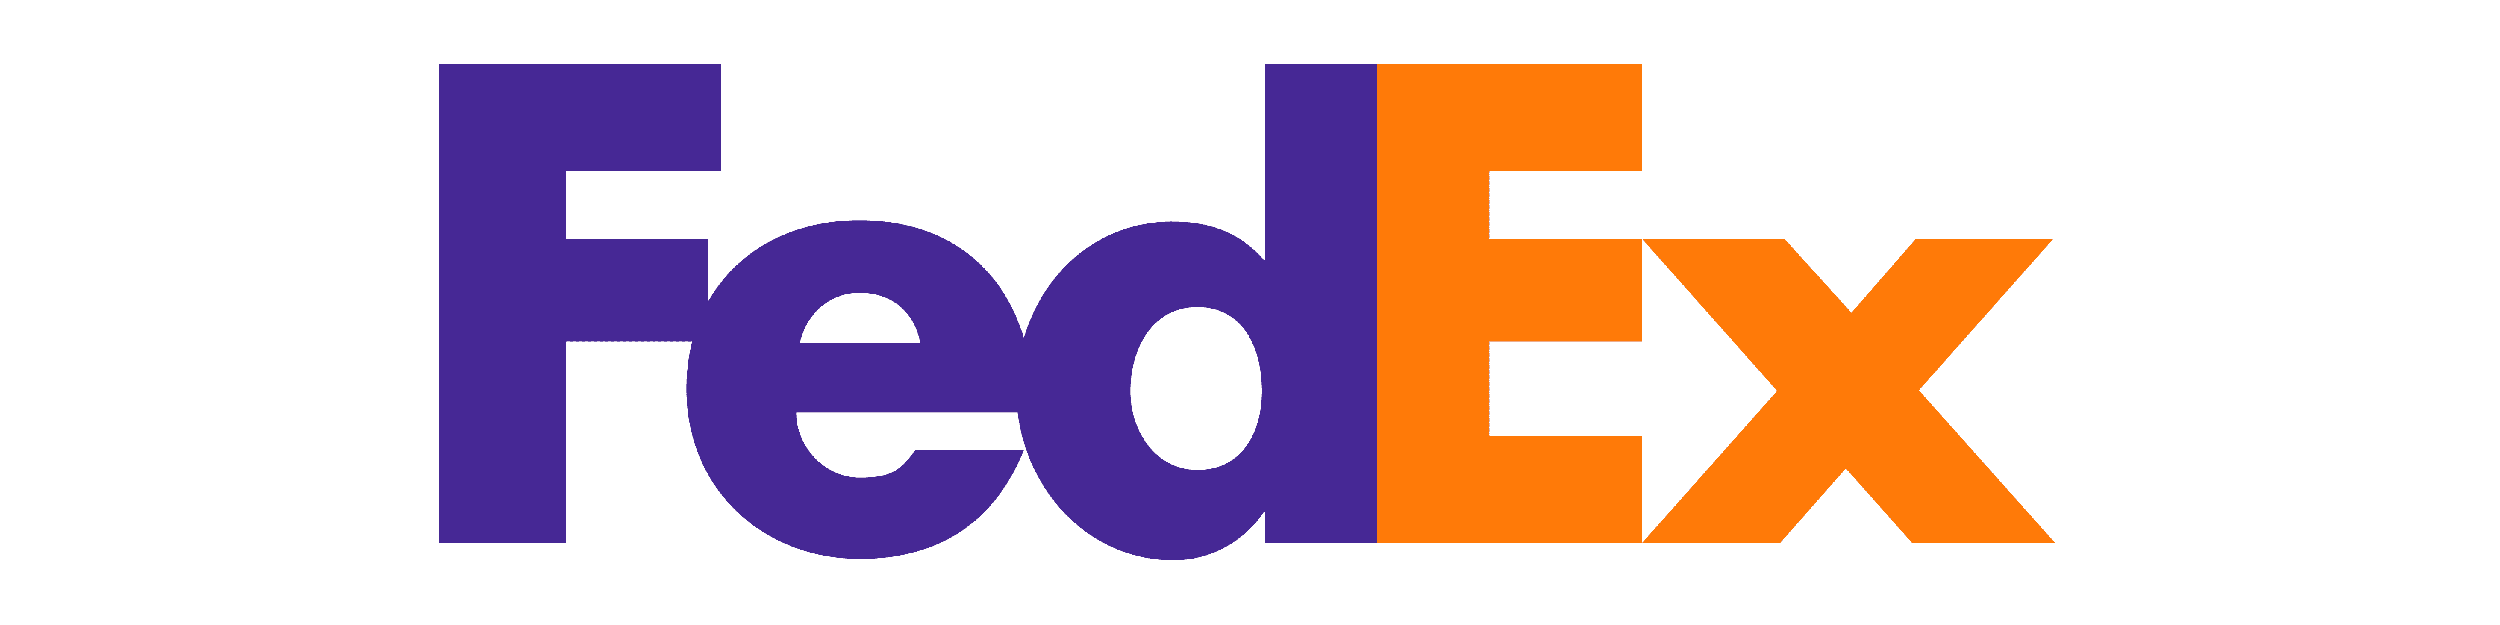 FedEx Express 